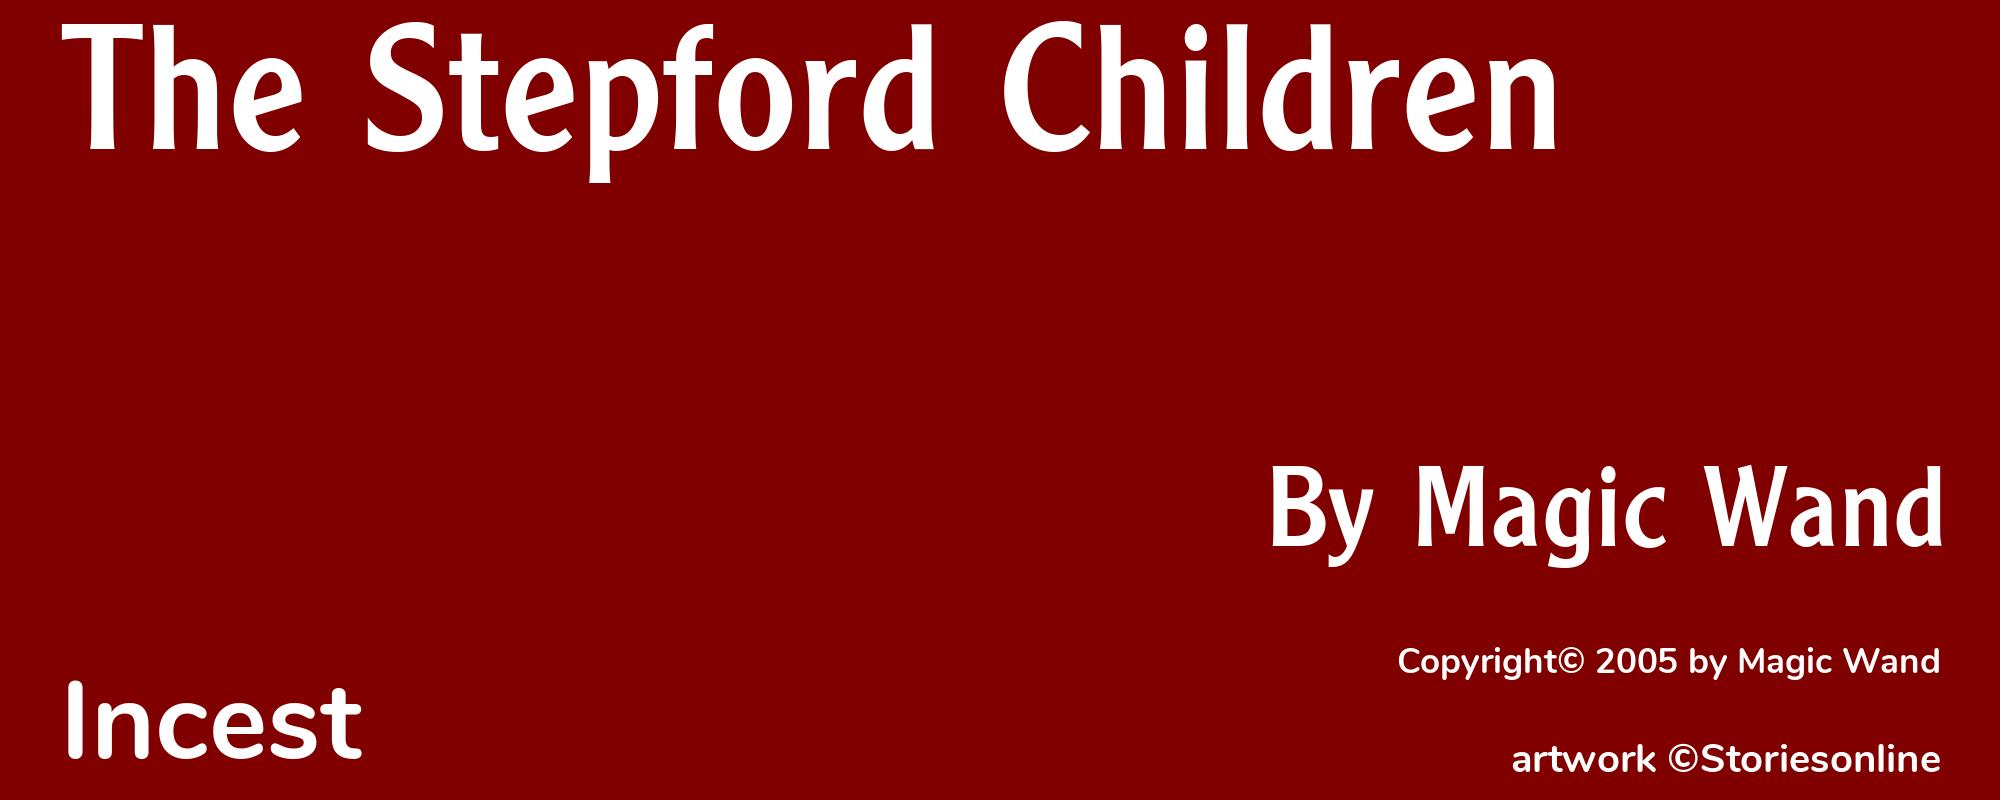 The Stepford Children - Cover